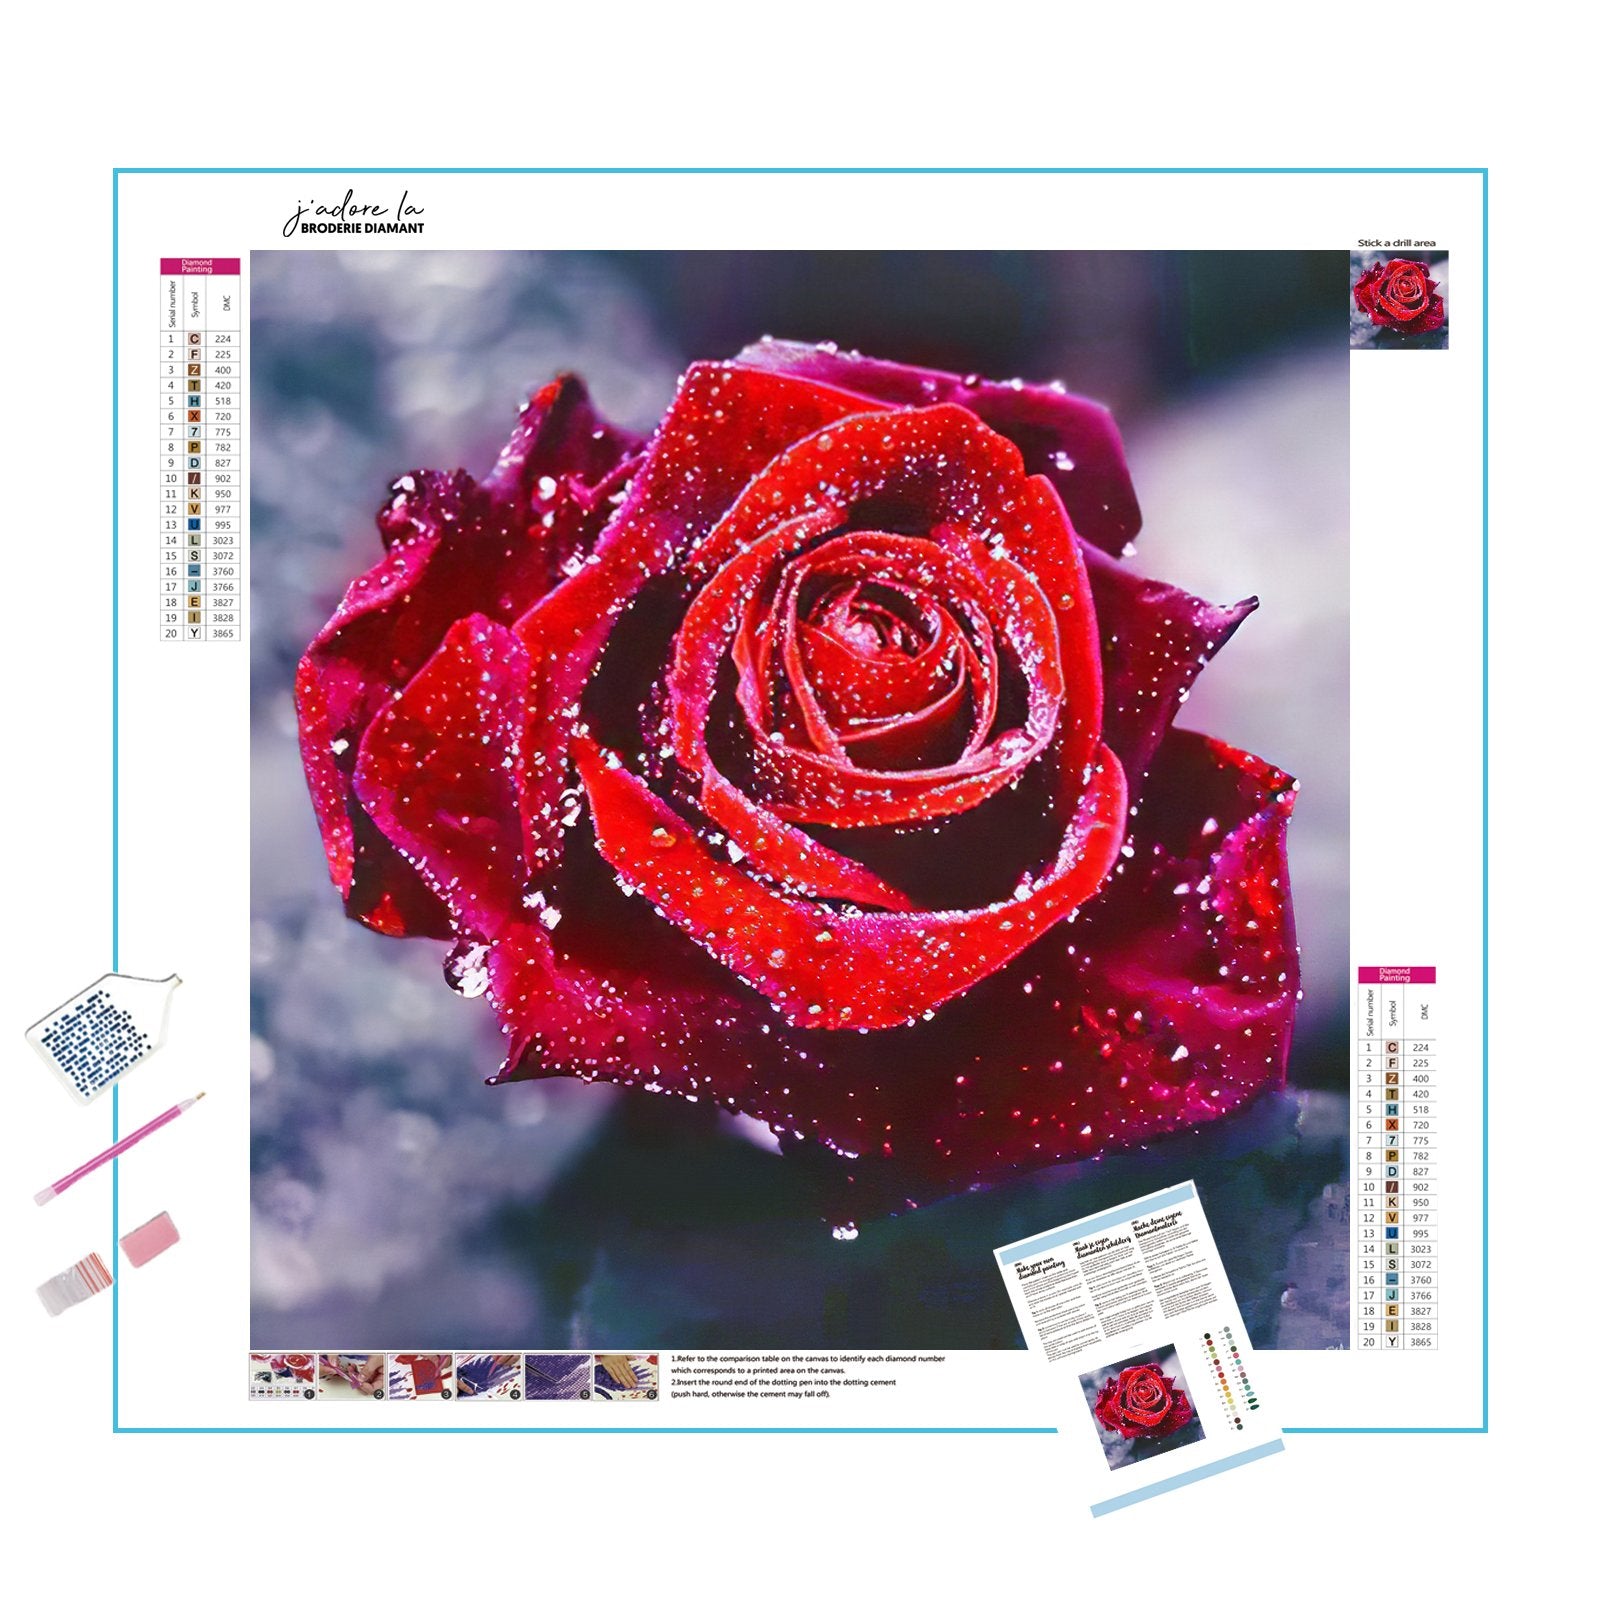 A rose in full bloom, symbolizing beauty and renewal. Blooming Rose - Diamondartlove